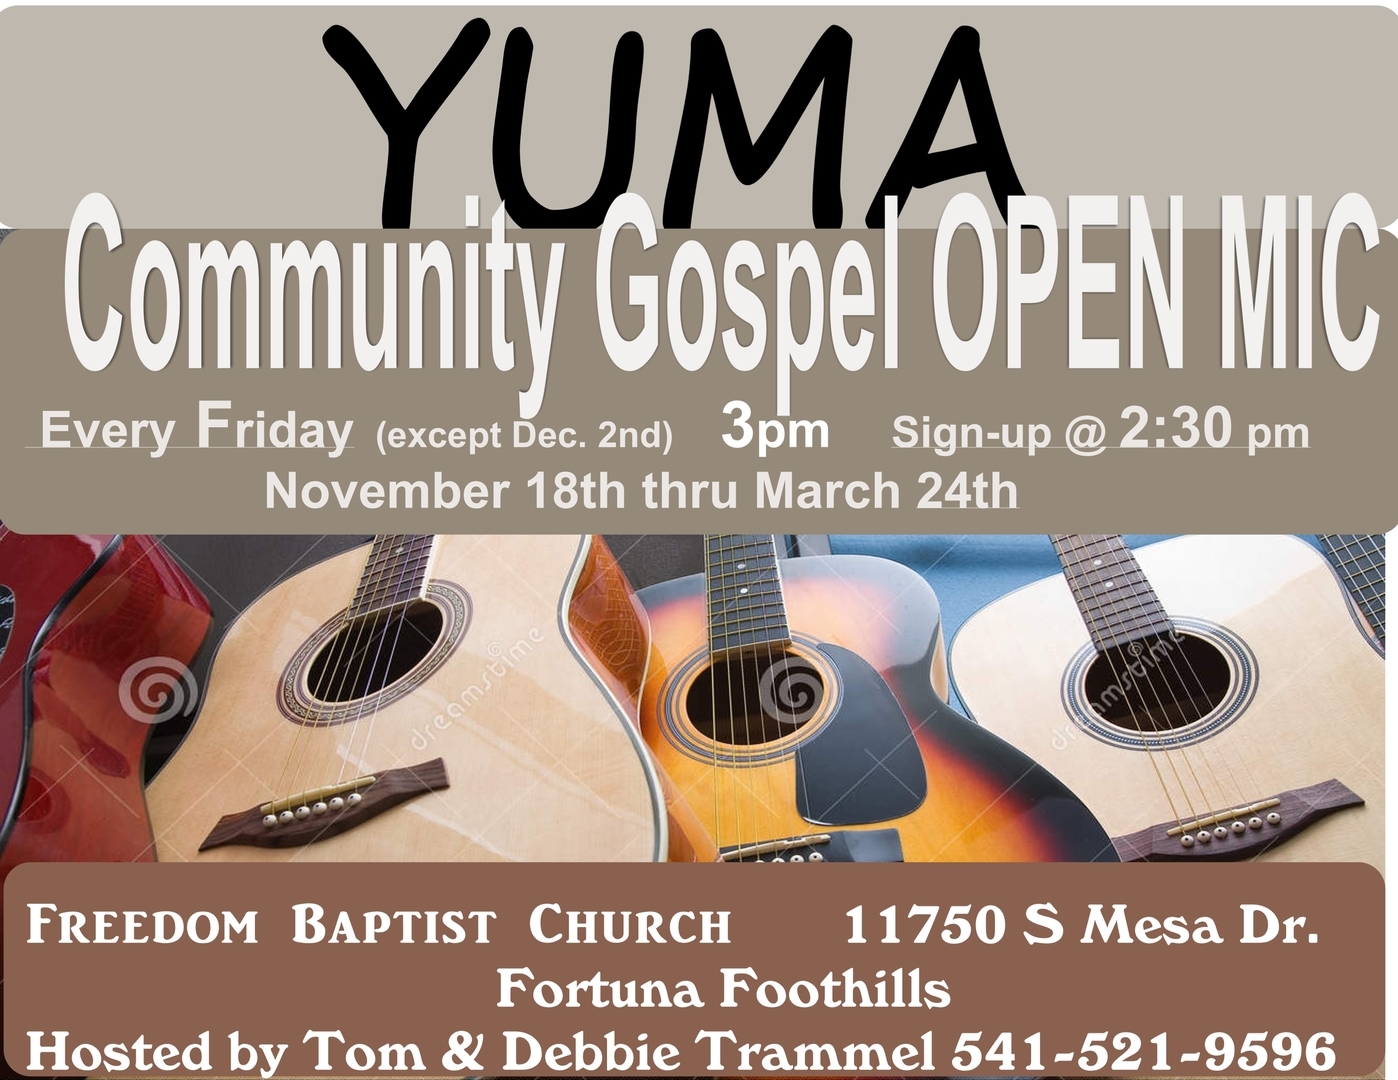 EVERY FRIDAY!!! YUMA Gospel OPEN MIC 3pm @ Freedom Baptist Church 11750 S. Mesa Drive YUMA FOOTHILLS, Yuma, Arizona, United States